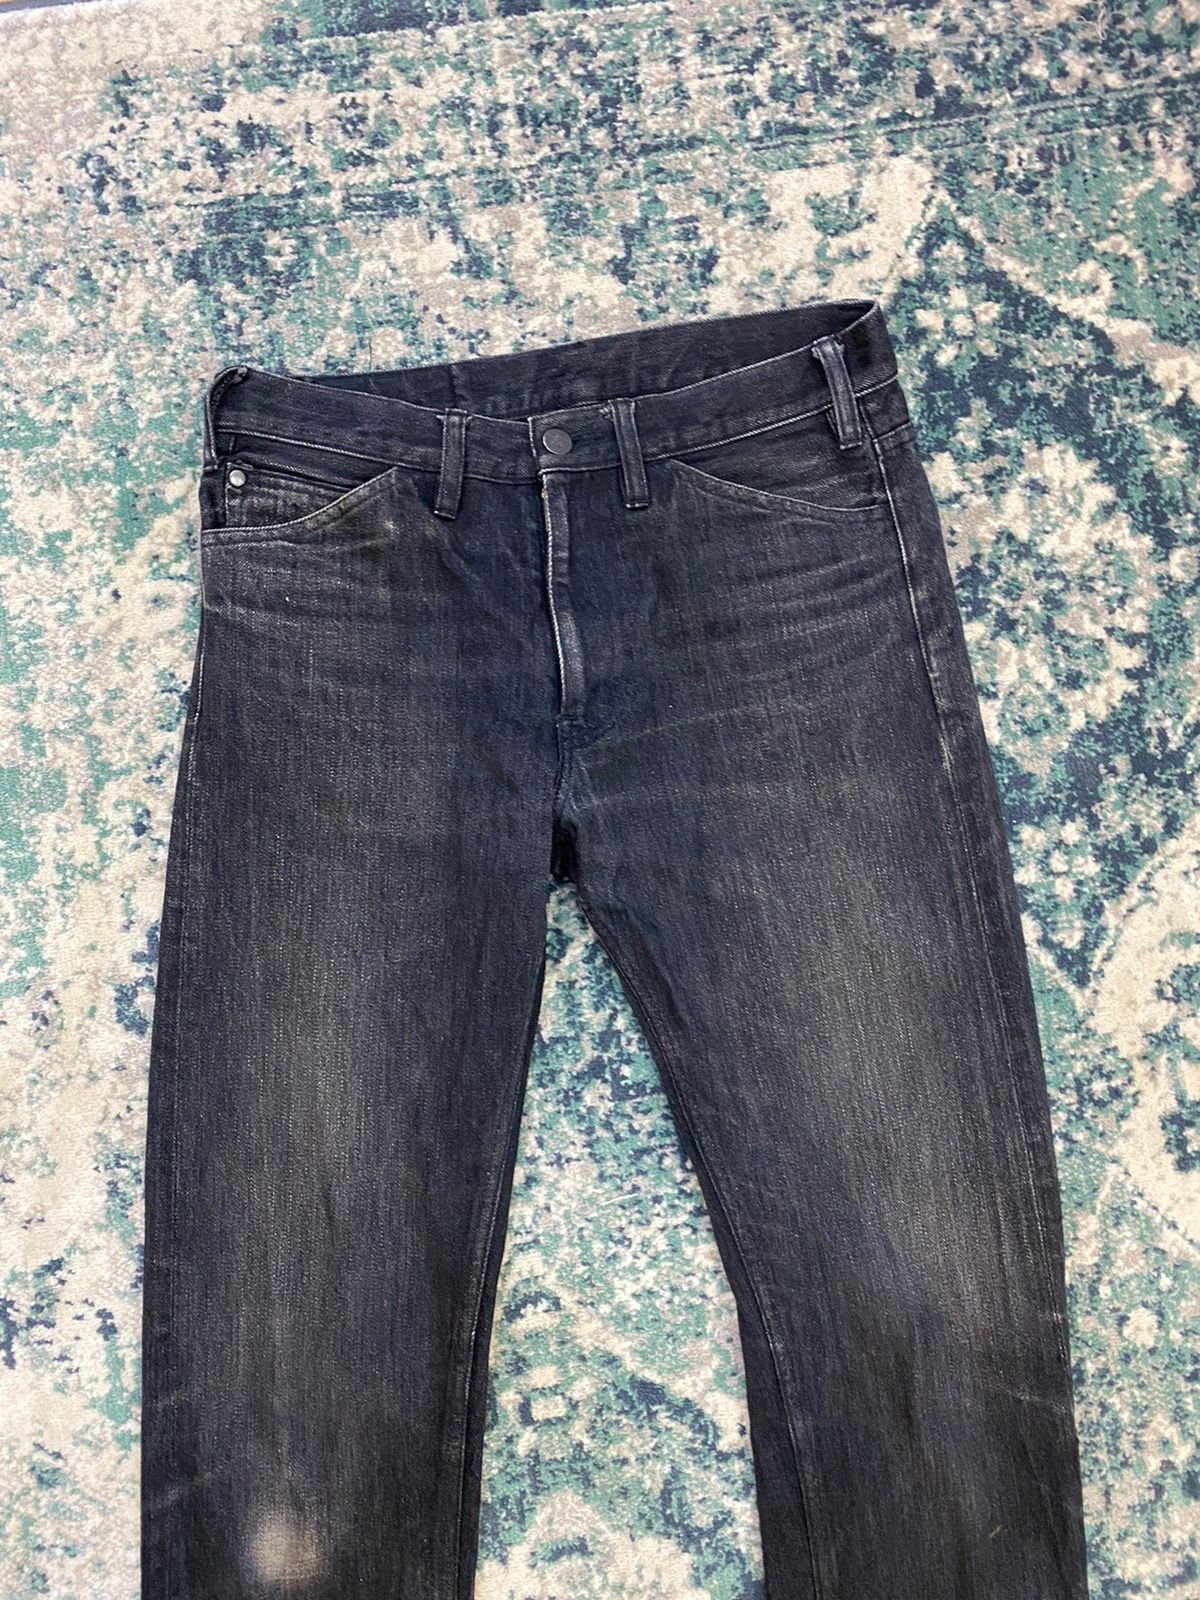 Lemaire Black Leather Lining Pocket Jeans - 4